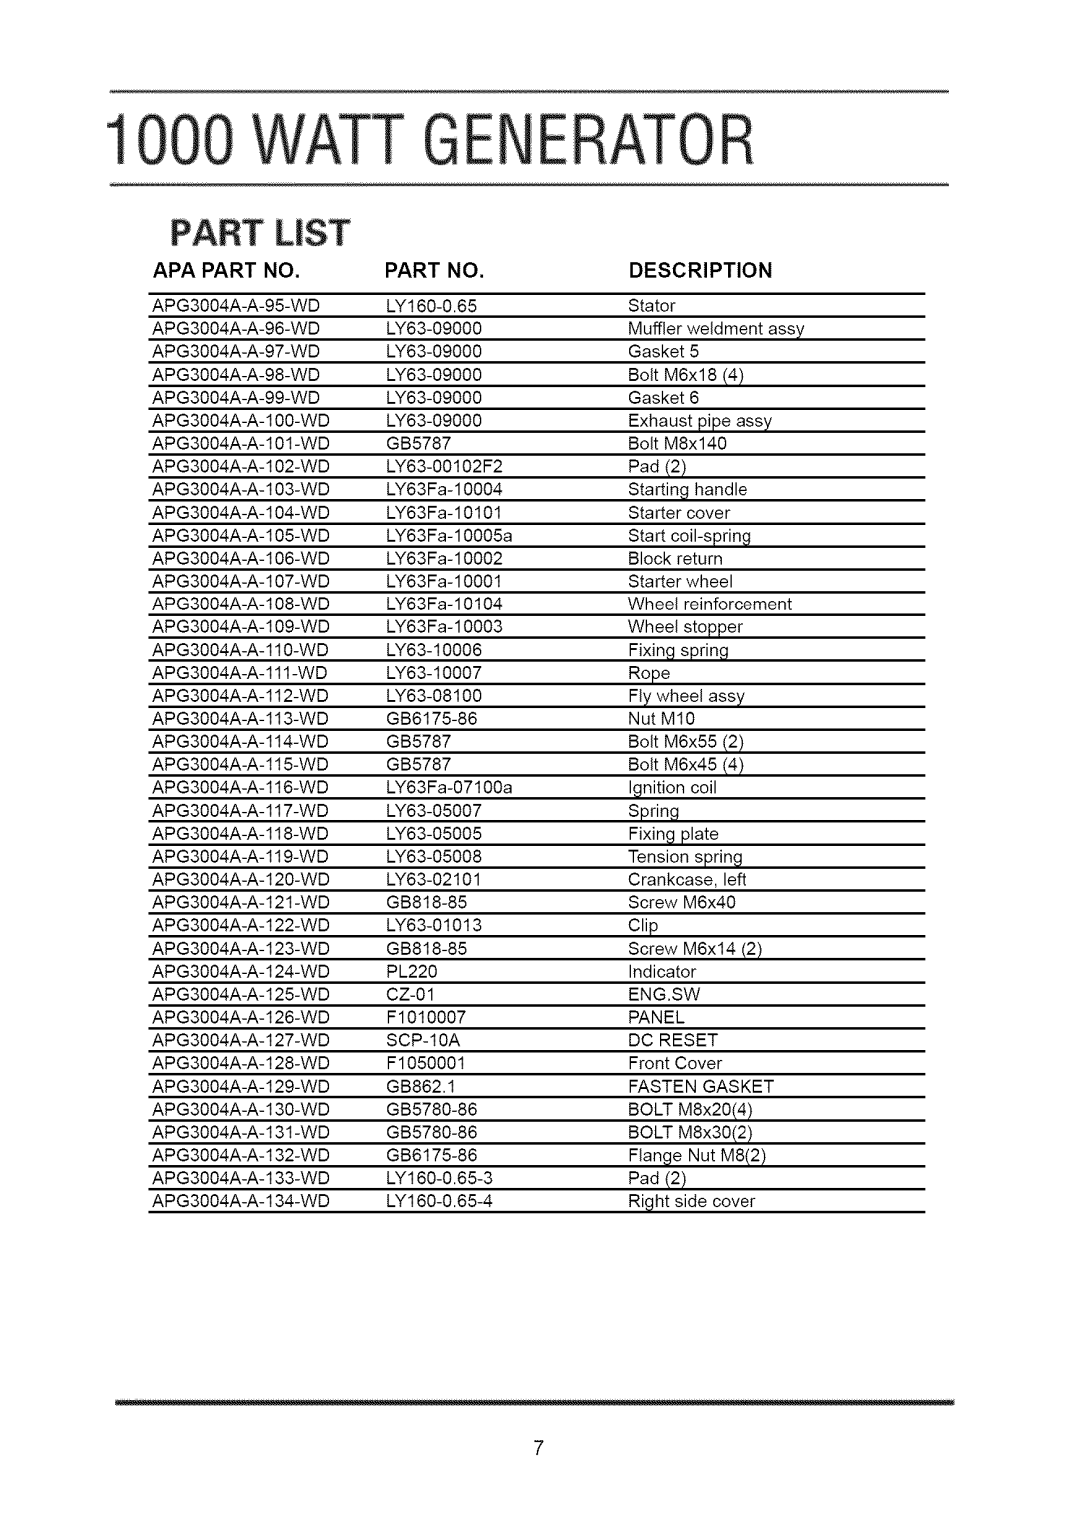 Sears APG3004A manual Ge Erator, Part, List, weldment assy 